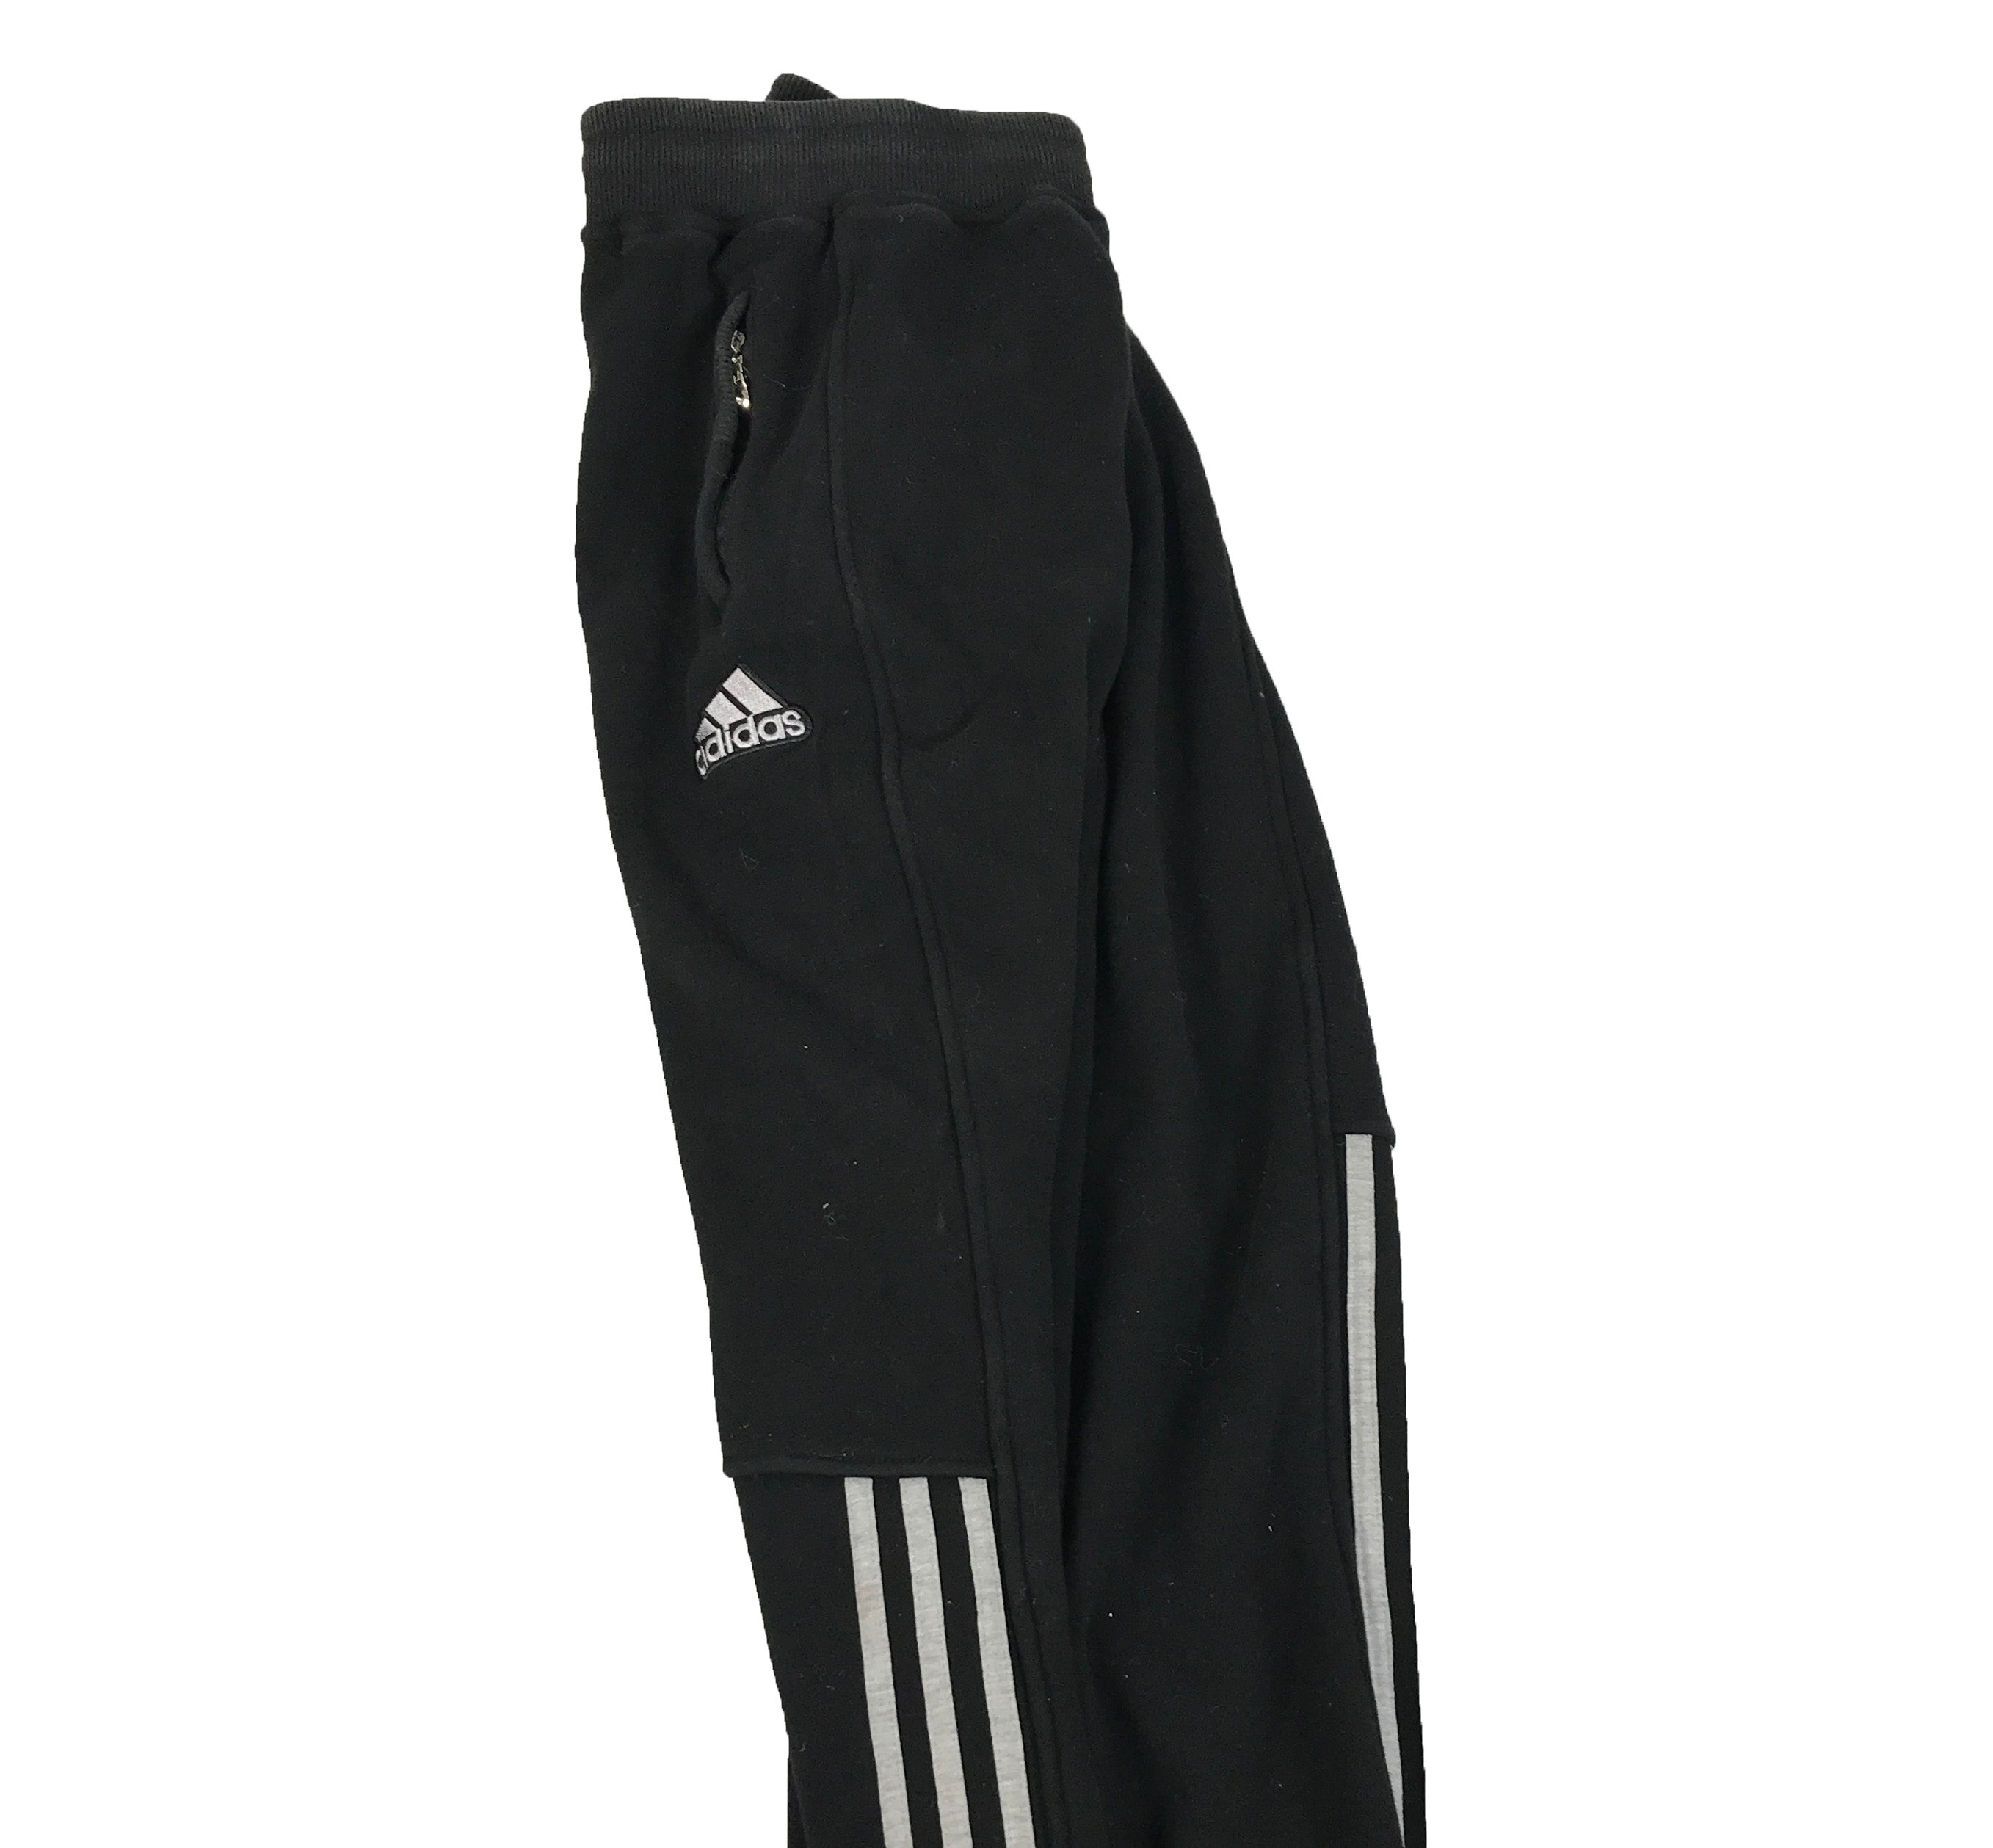 Adidas Black Sweatpants Women's Size 2XL